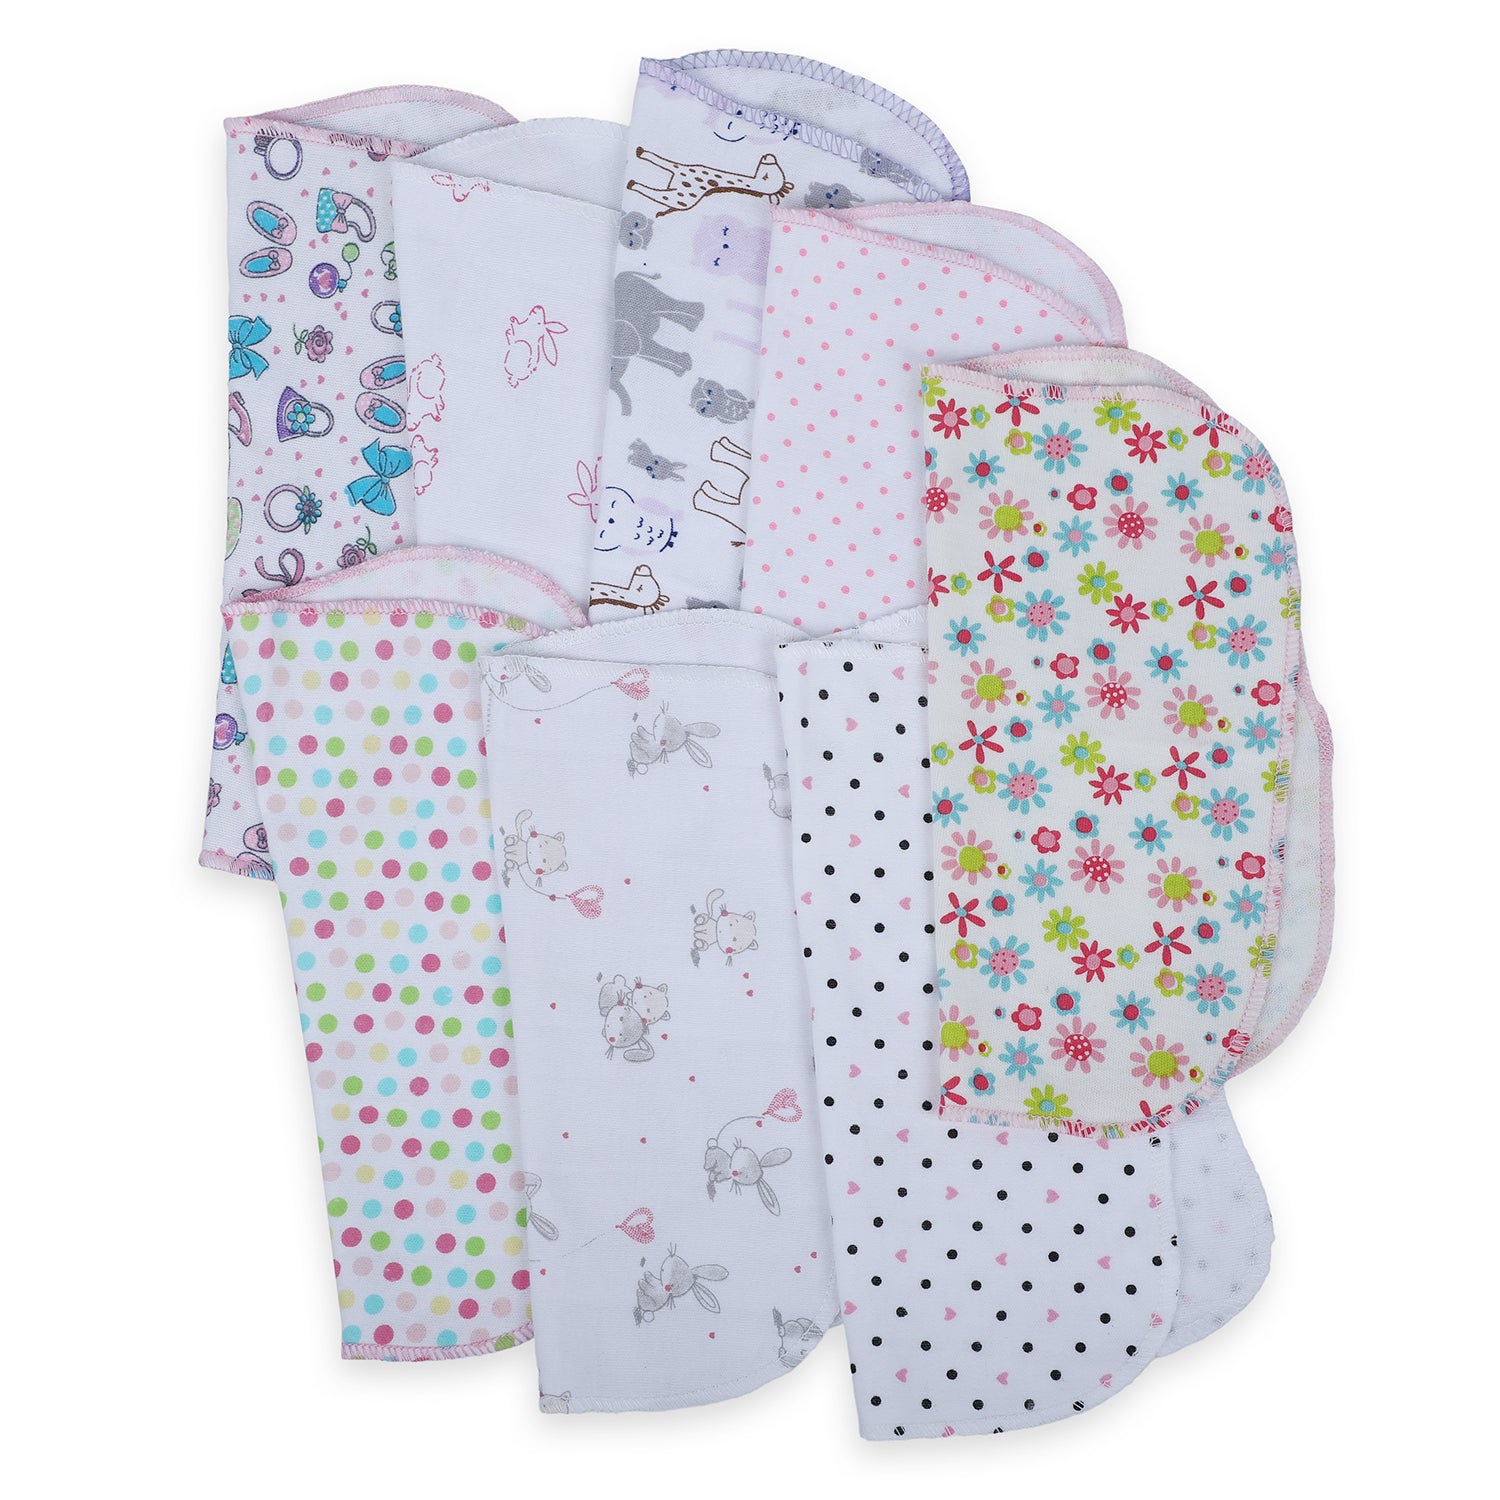 Baby Moo Girls Theme Cotton 20 x 20 cm Soft Hosiery Wash Cloth - Multicolour - Baby Moo